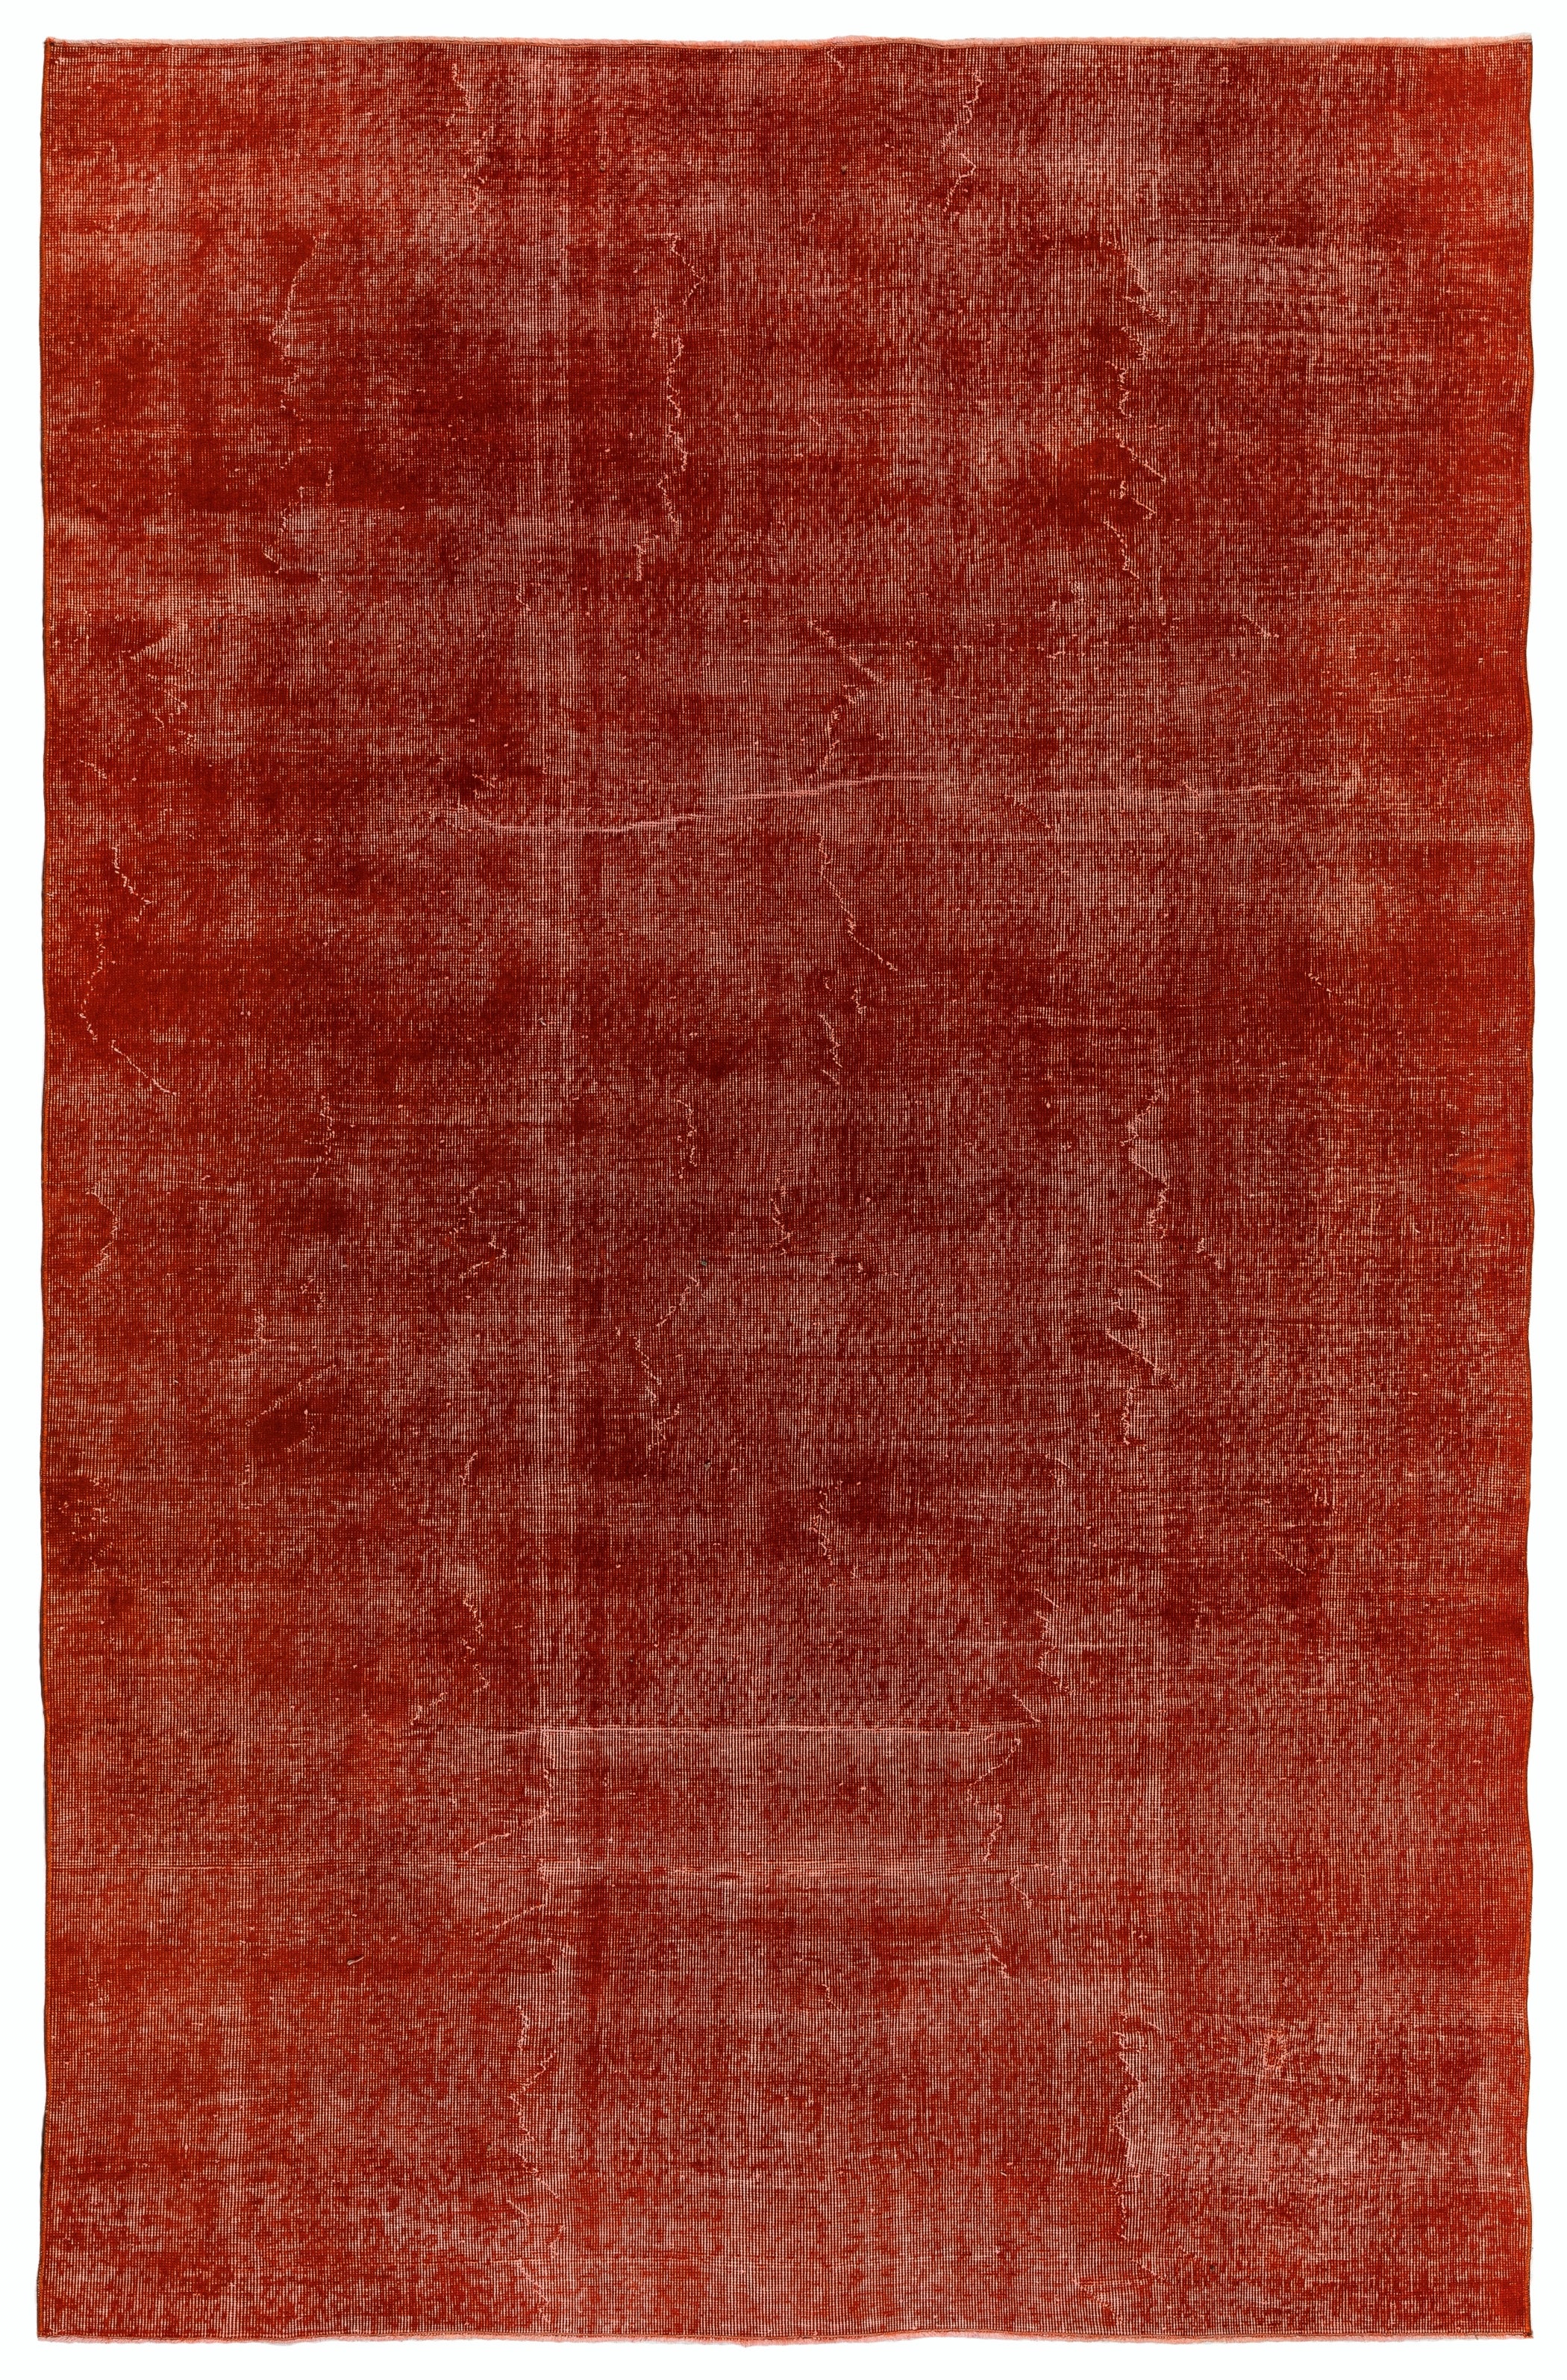 6.7x9.8 Ft Plain Solid Burnt Orange Turkish Rug. Modern Handmade Upcycled Carpet